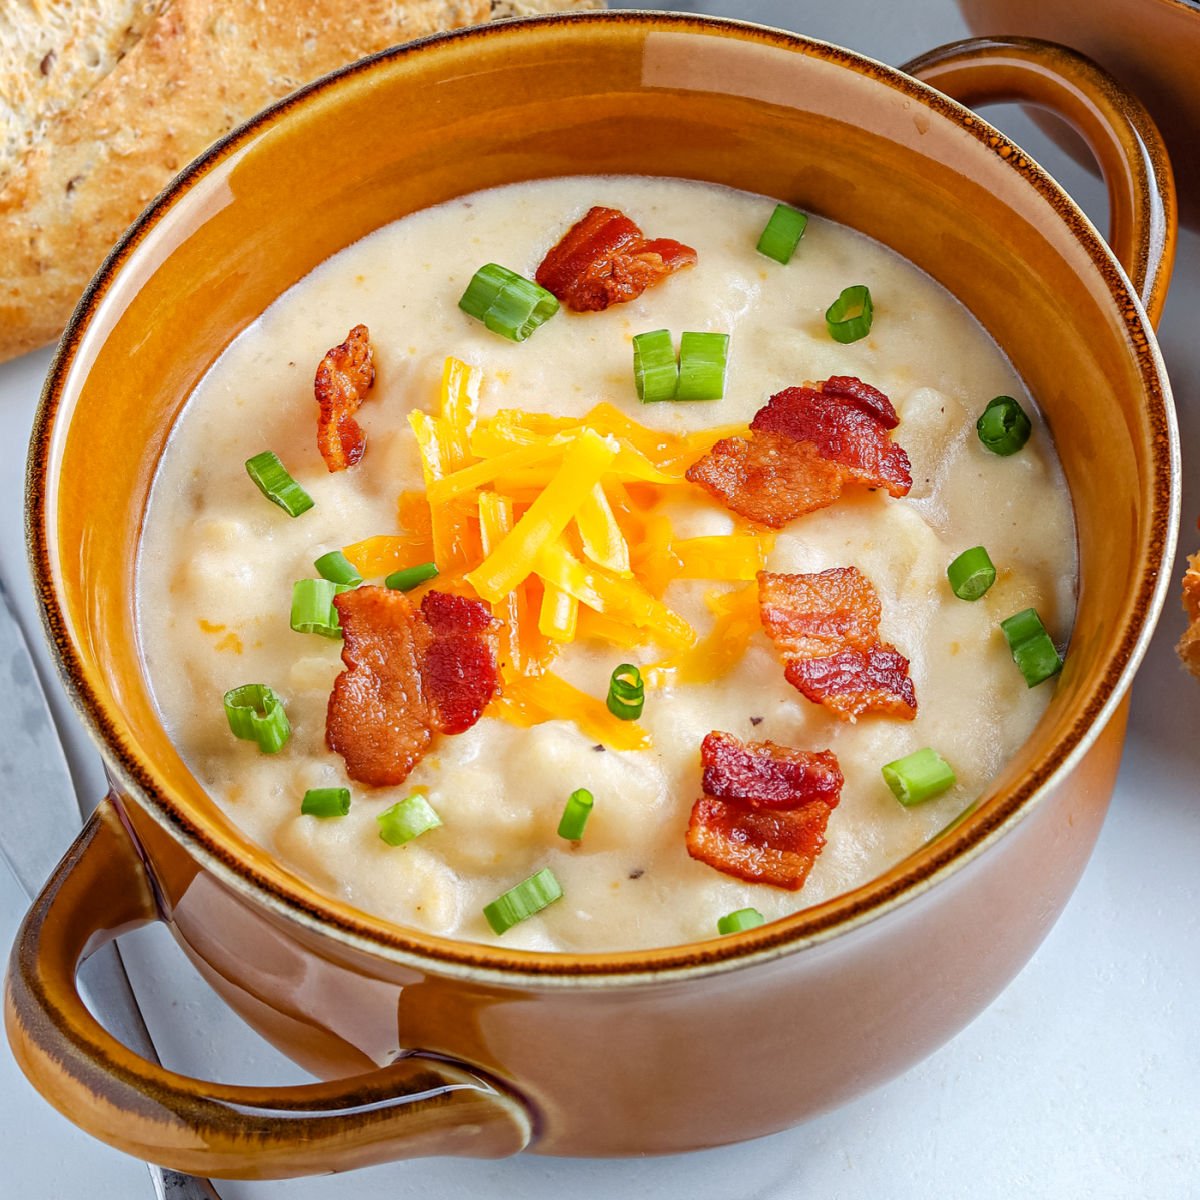 https://foodfolksandfun.net/wp-content/uploads/2017/02/Slow-Cooker-Loaded-Baked-Potato-Soup-Recipe.jpg